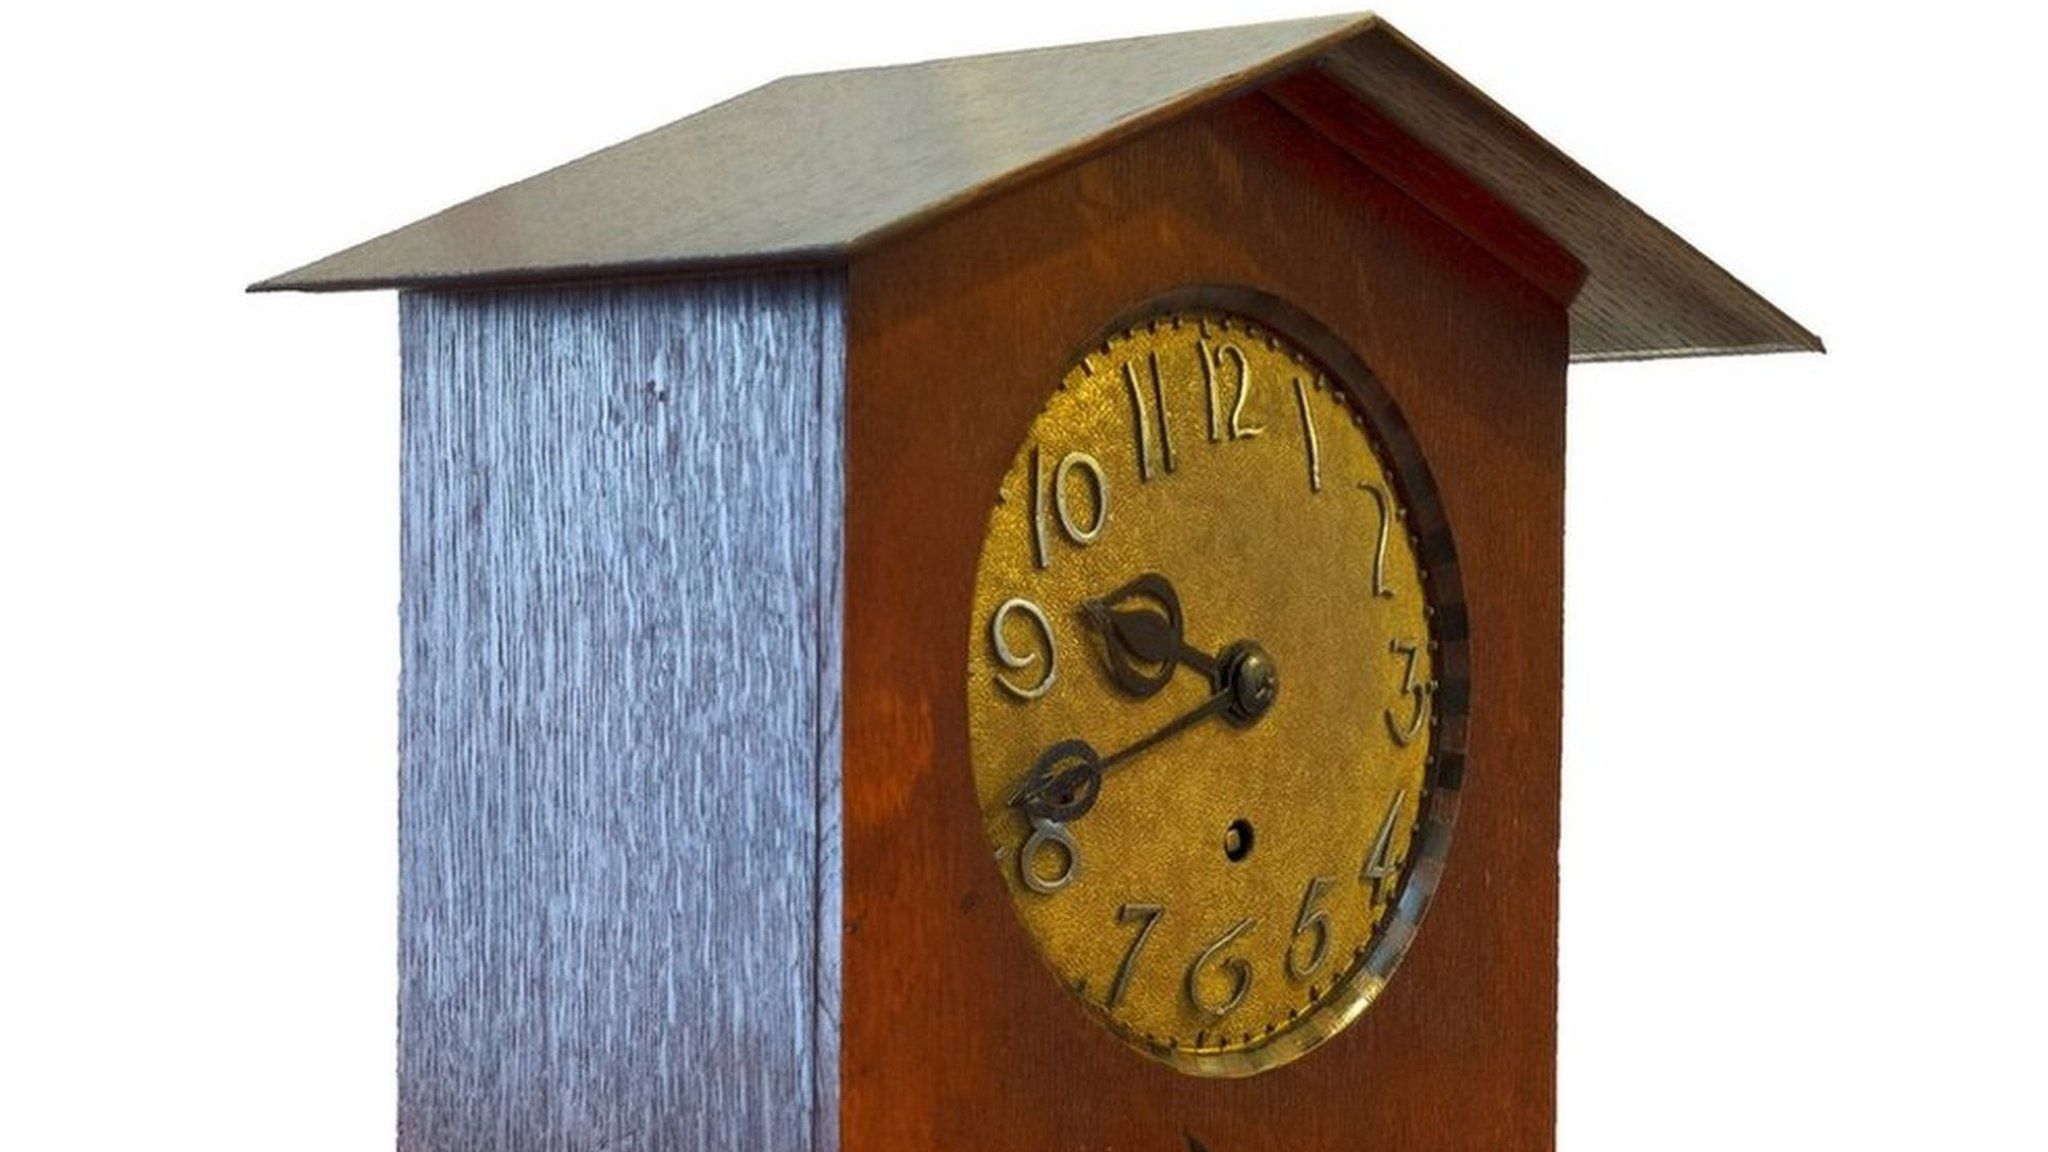 The Pyghtle Clock